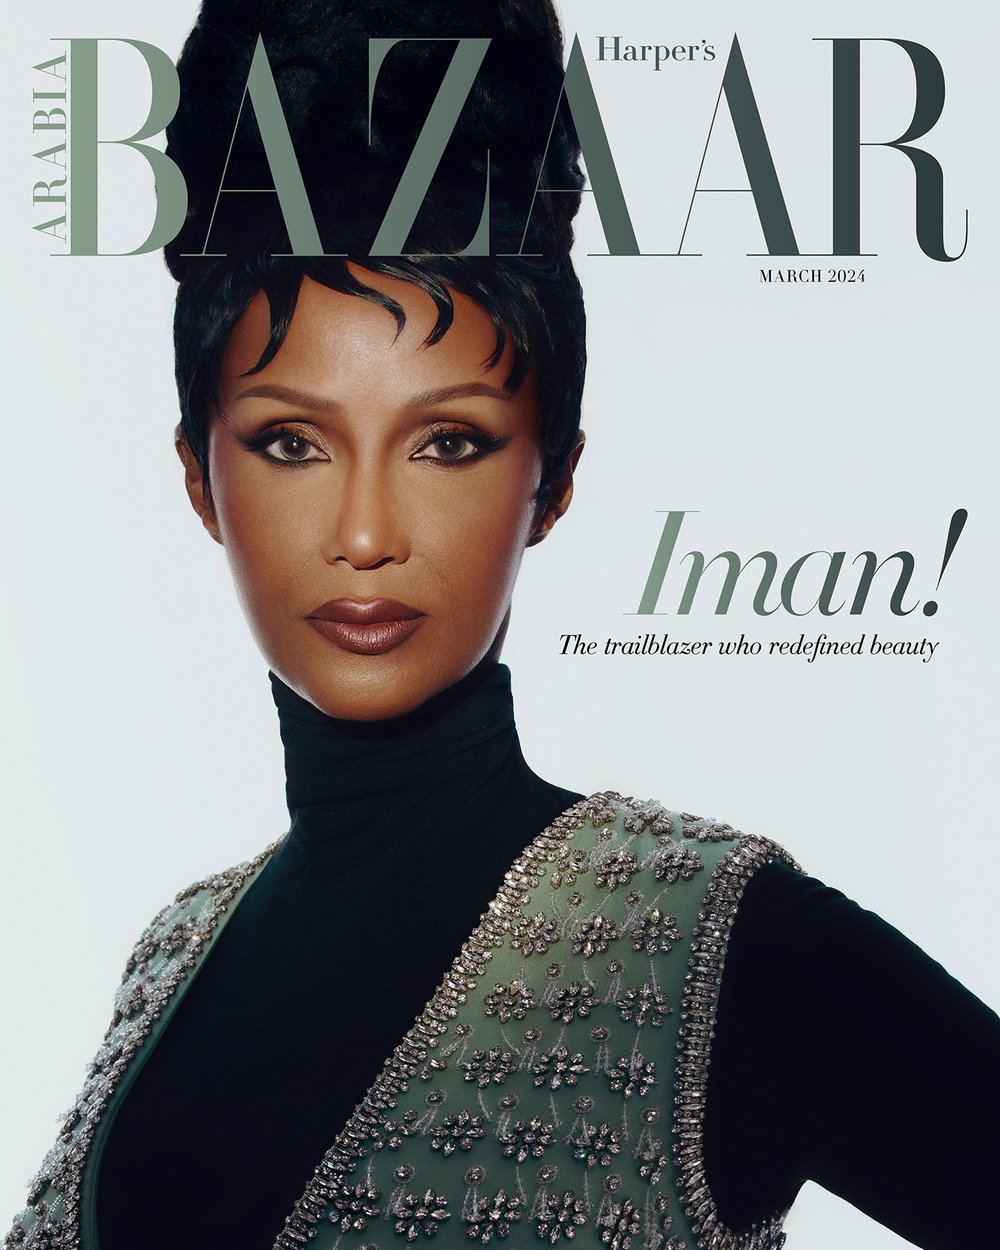 Iman Cover Story2.JPEG